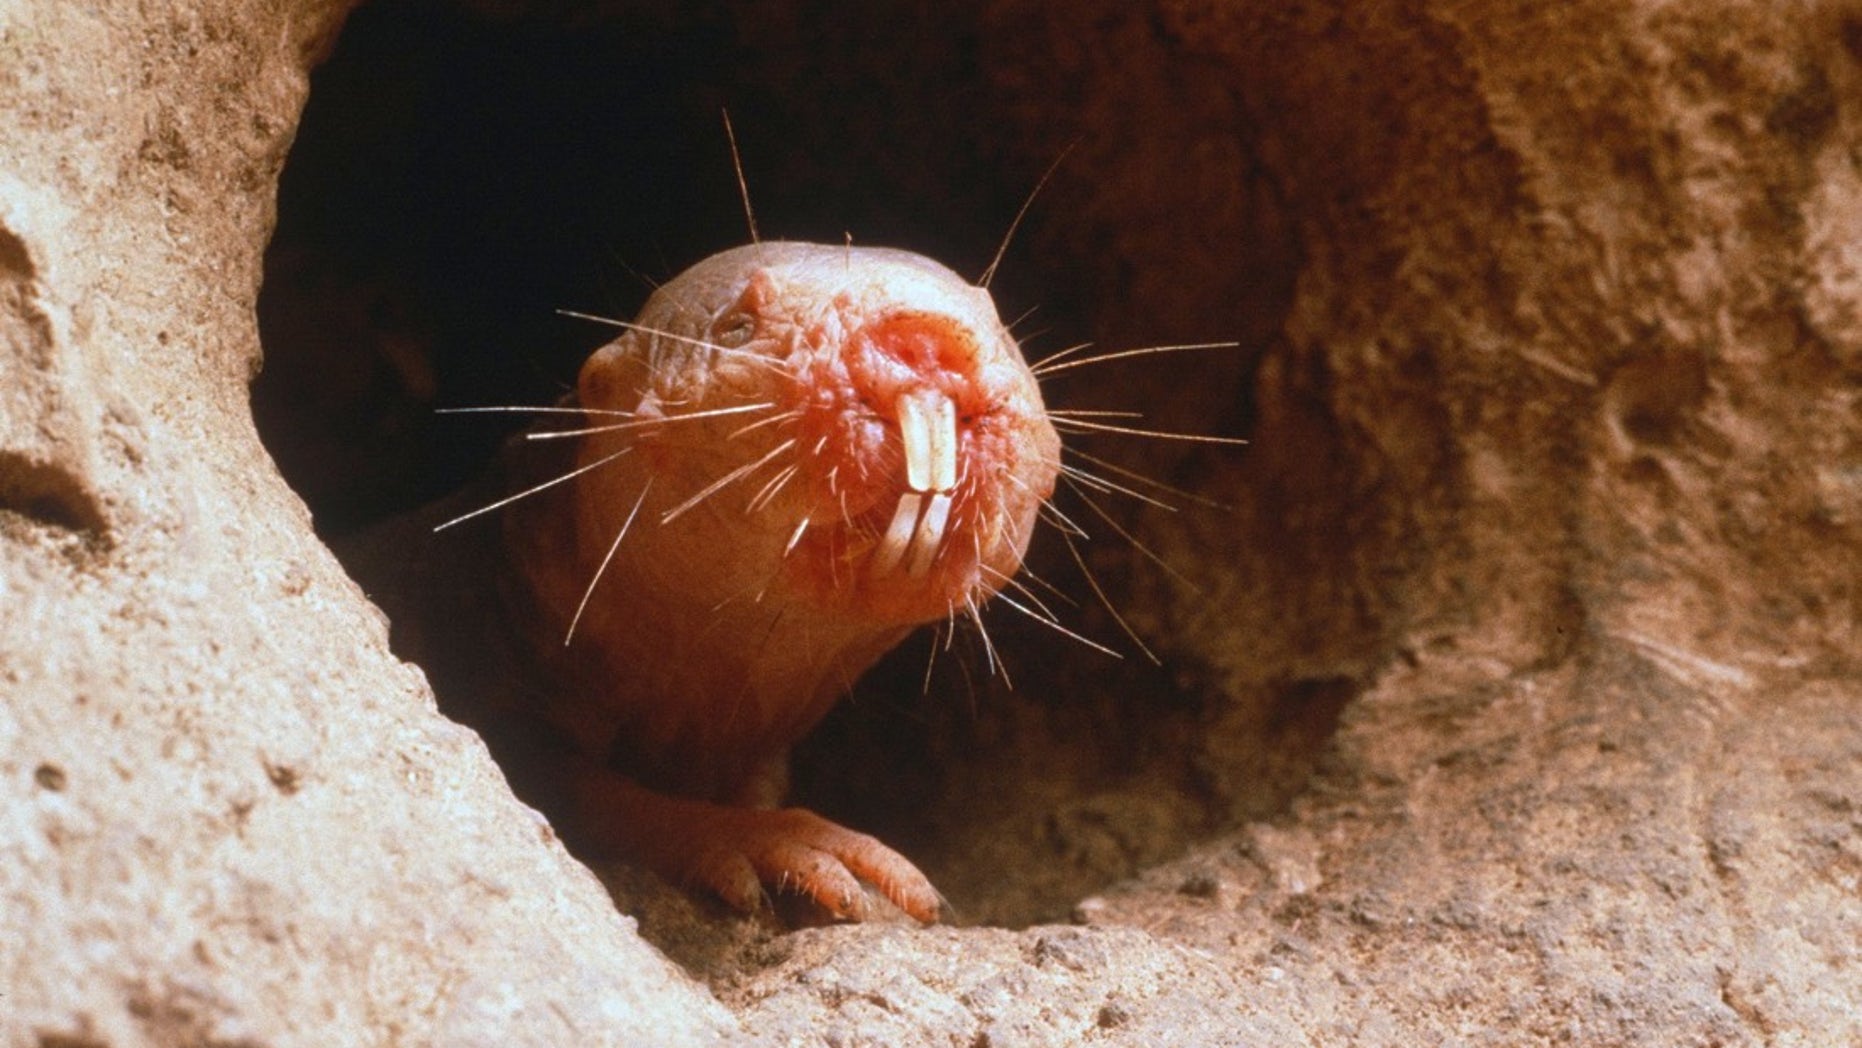 rufus naked mole rat